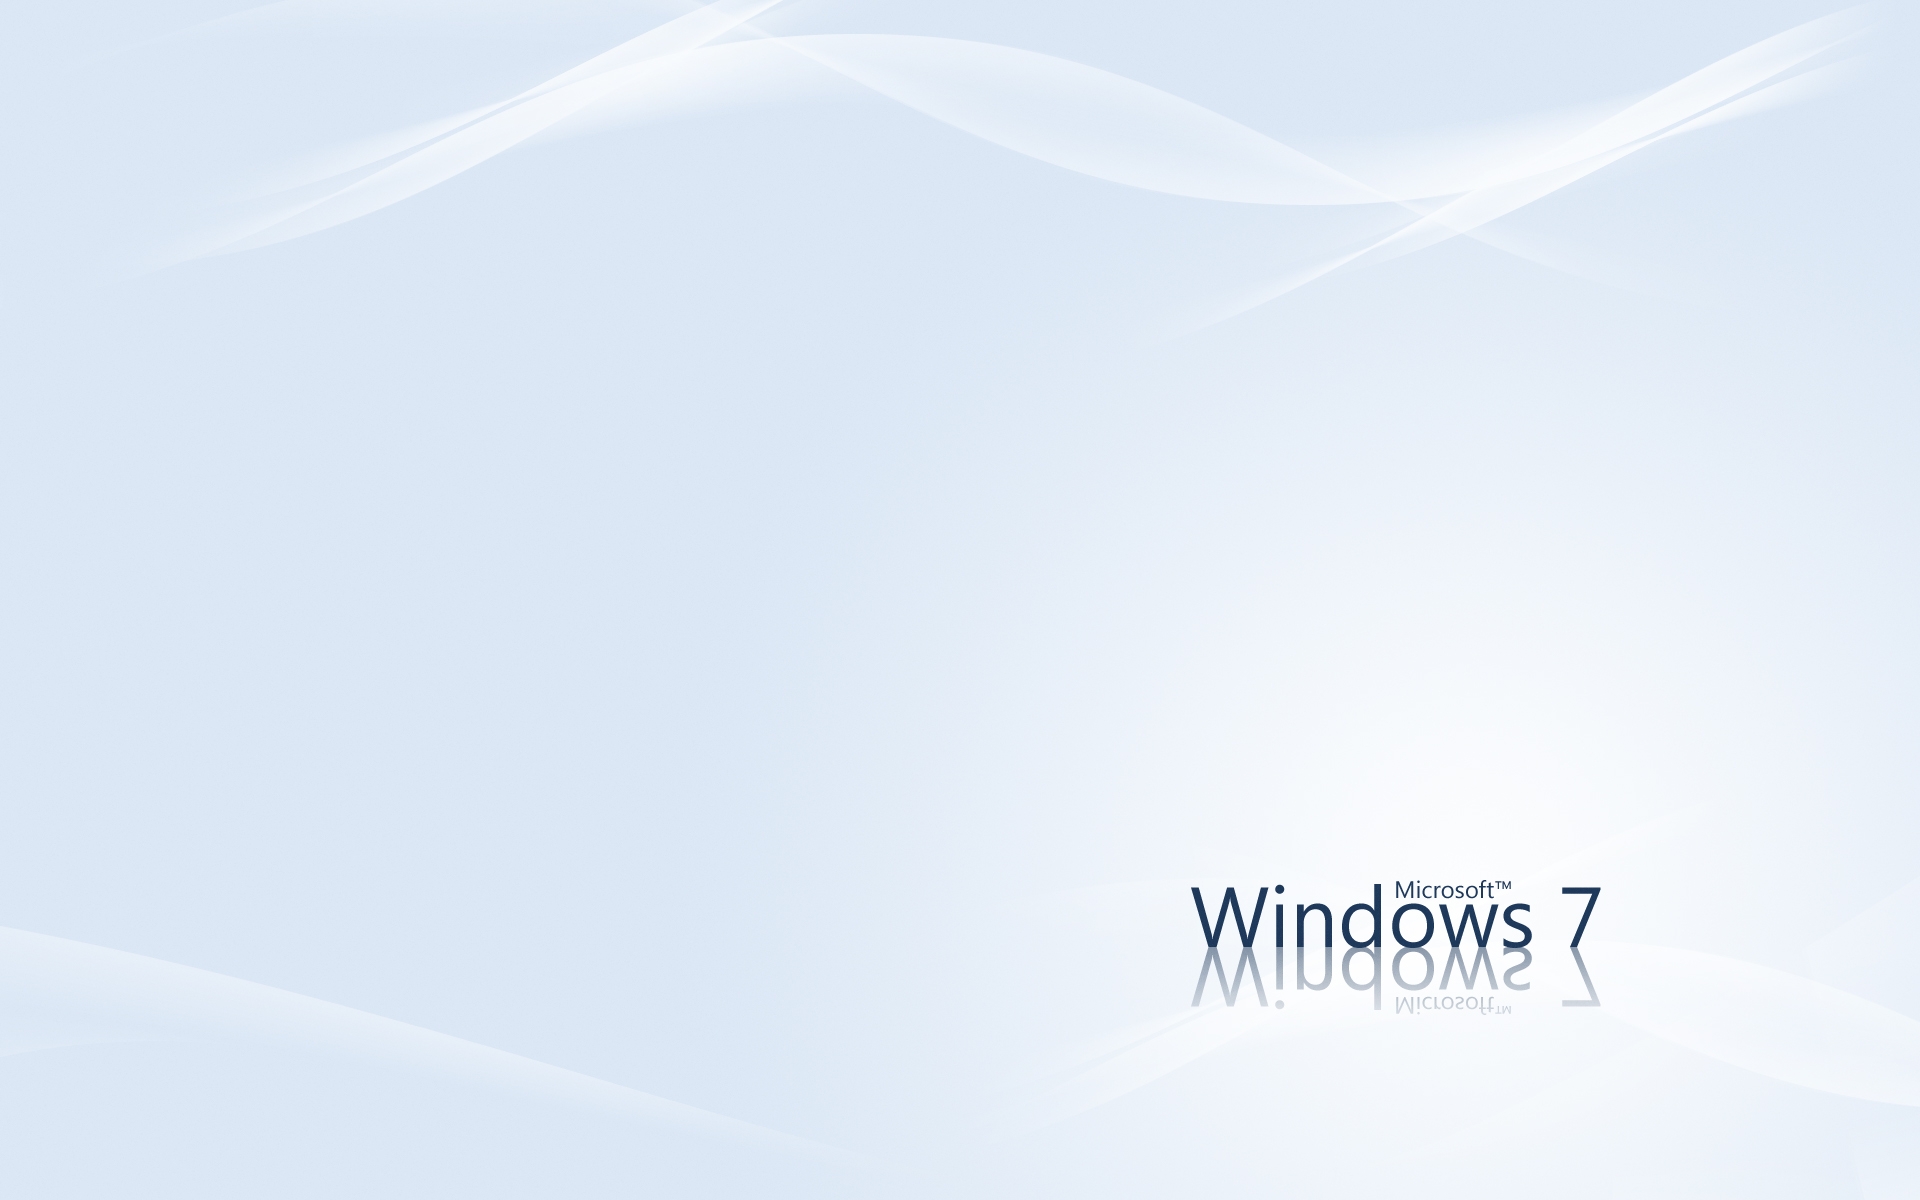 Windows 7 Bright wallpaper. Windows 7 Bright